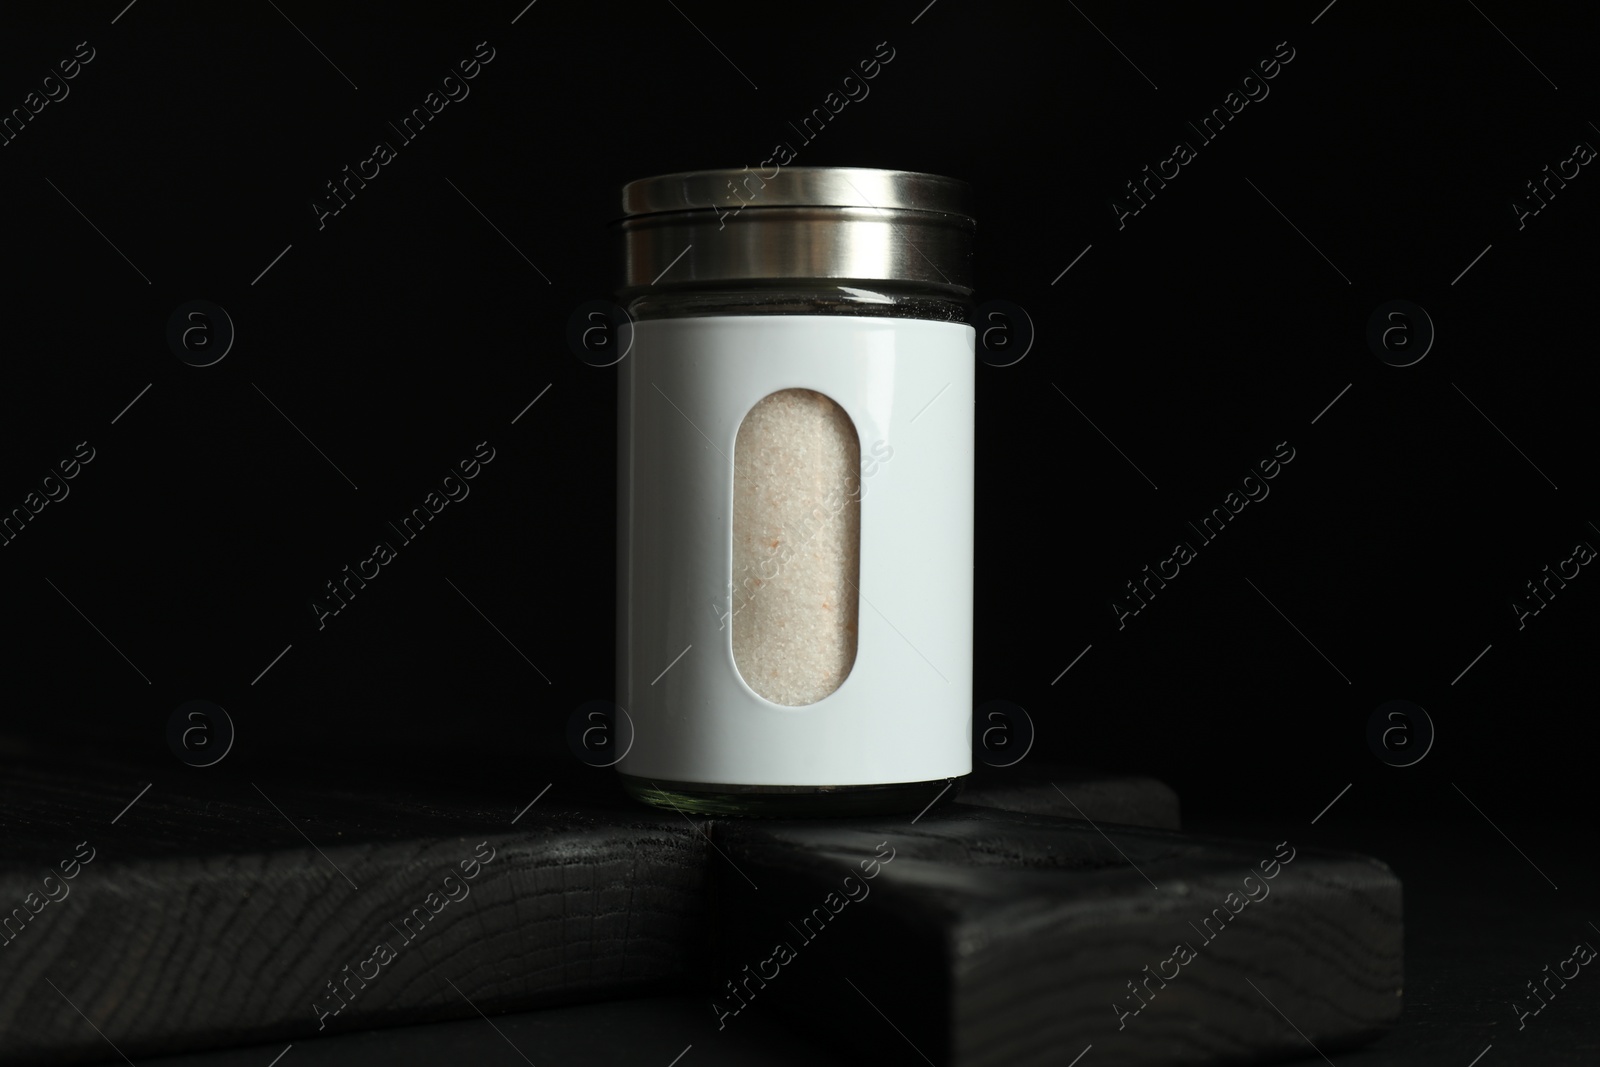 Photo of Salt shaker on table against black background